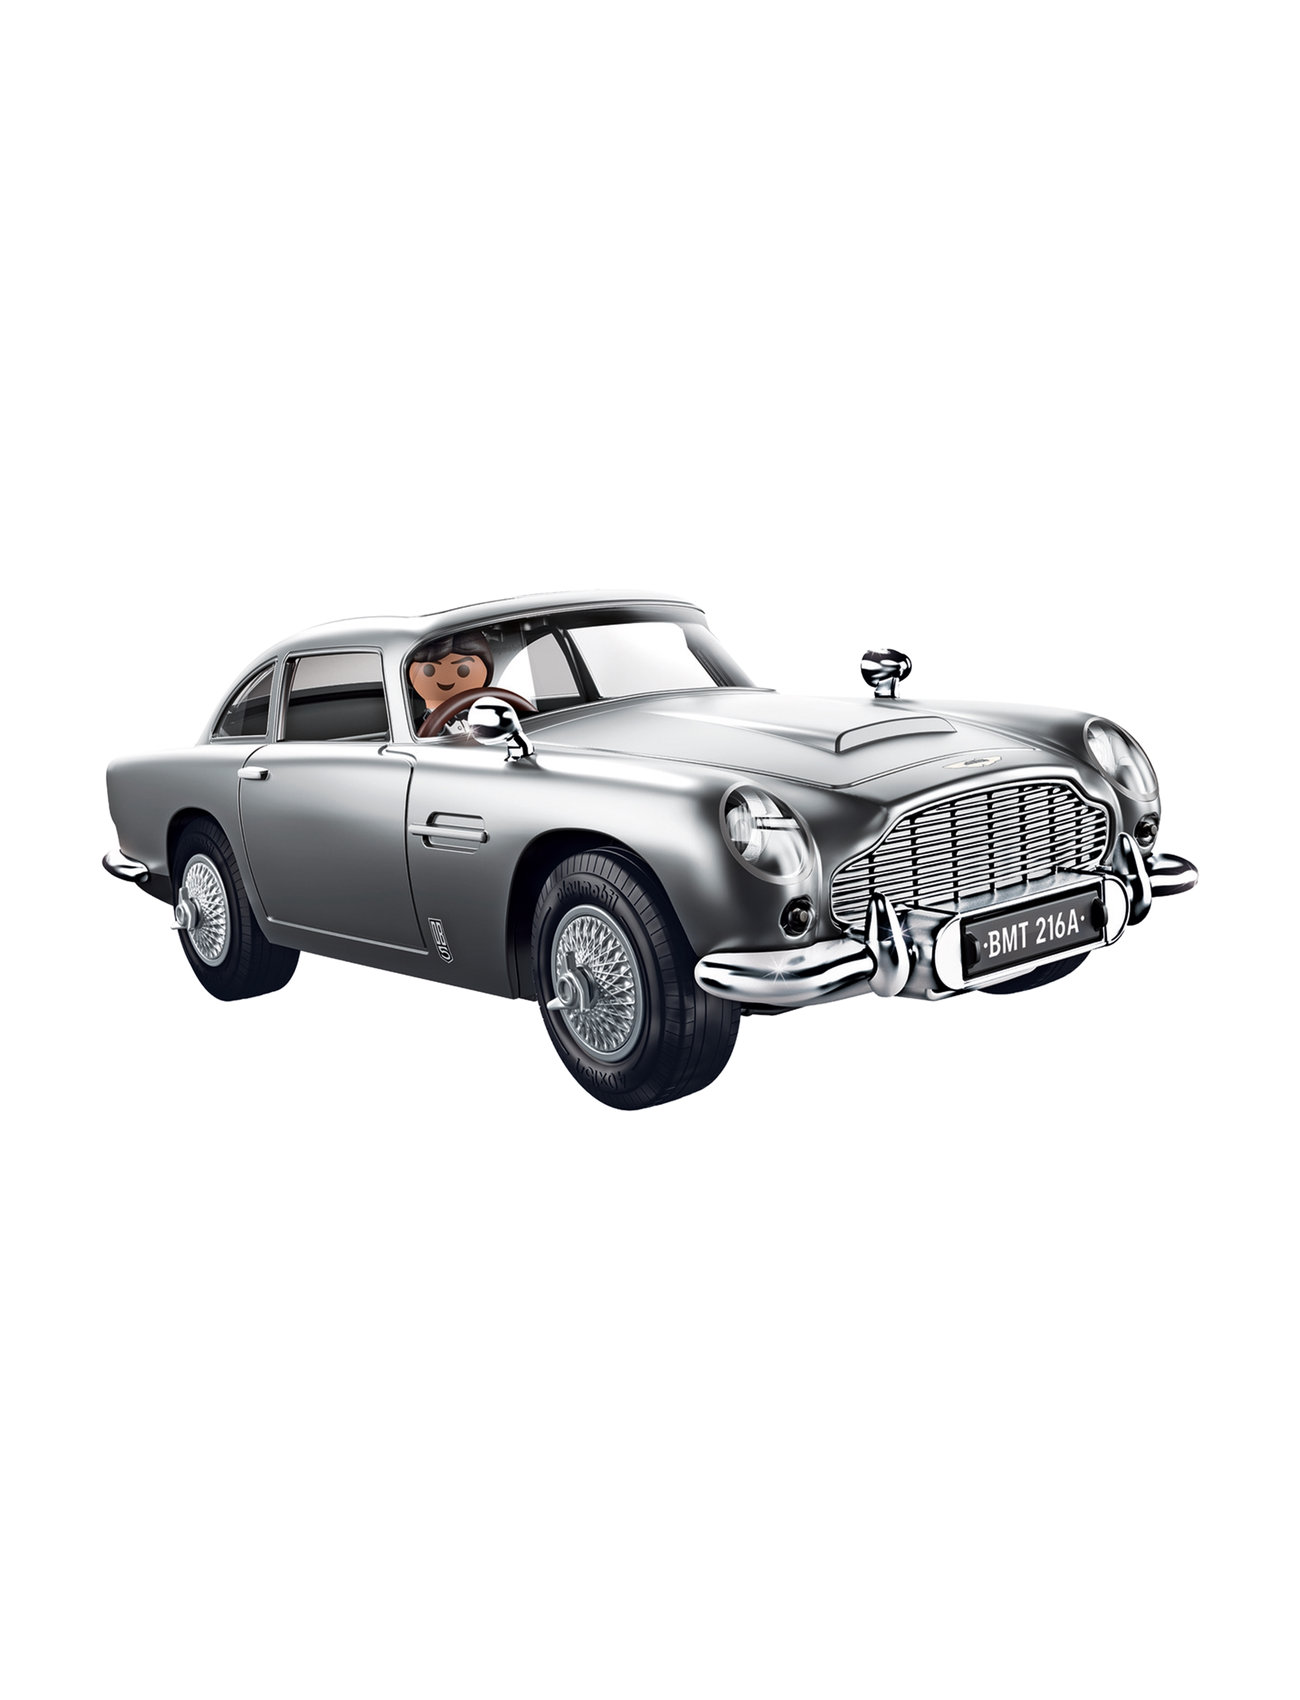 Playmobil James Bond Aston Martin Db5 – Goldfinger Edition - 70578 Toys Playmobil Toys Playmobil Movie Cars Multi/patterned PLAYMOBIL